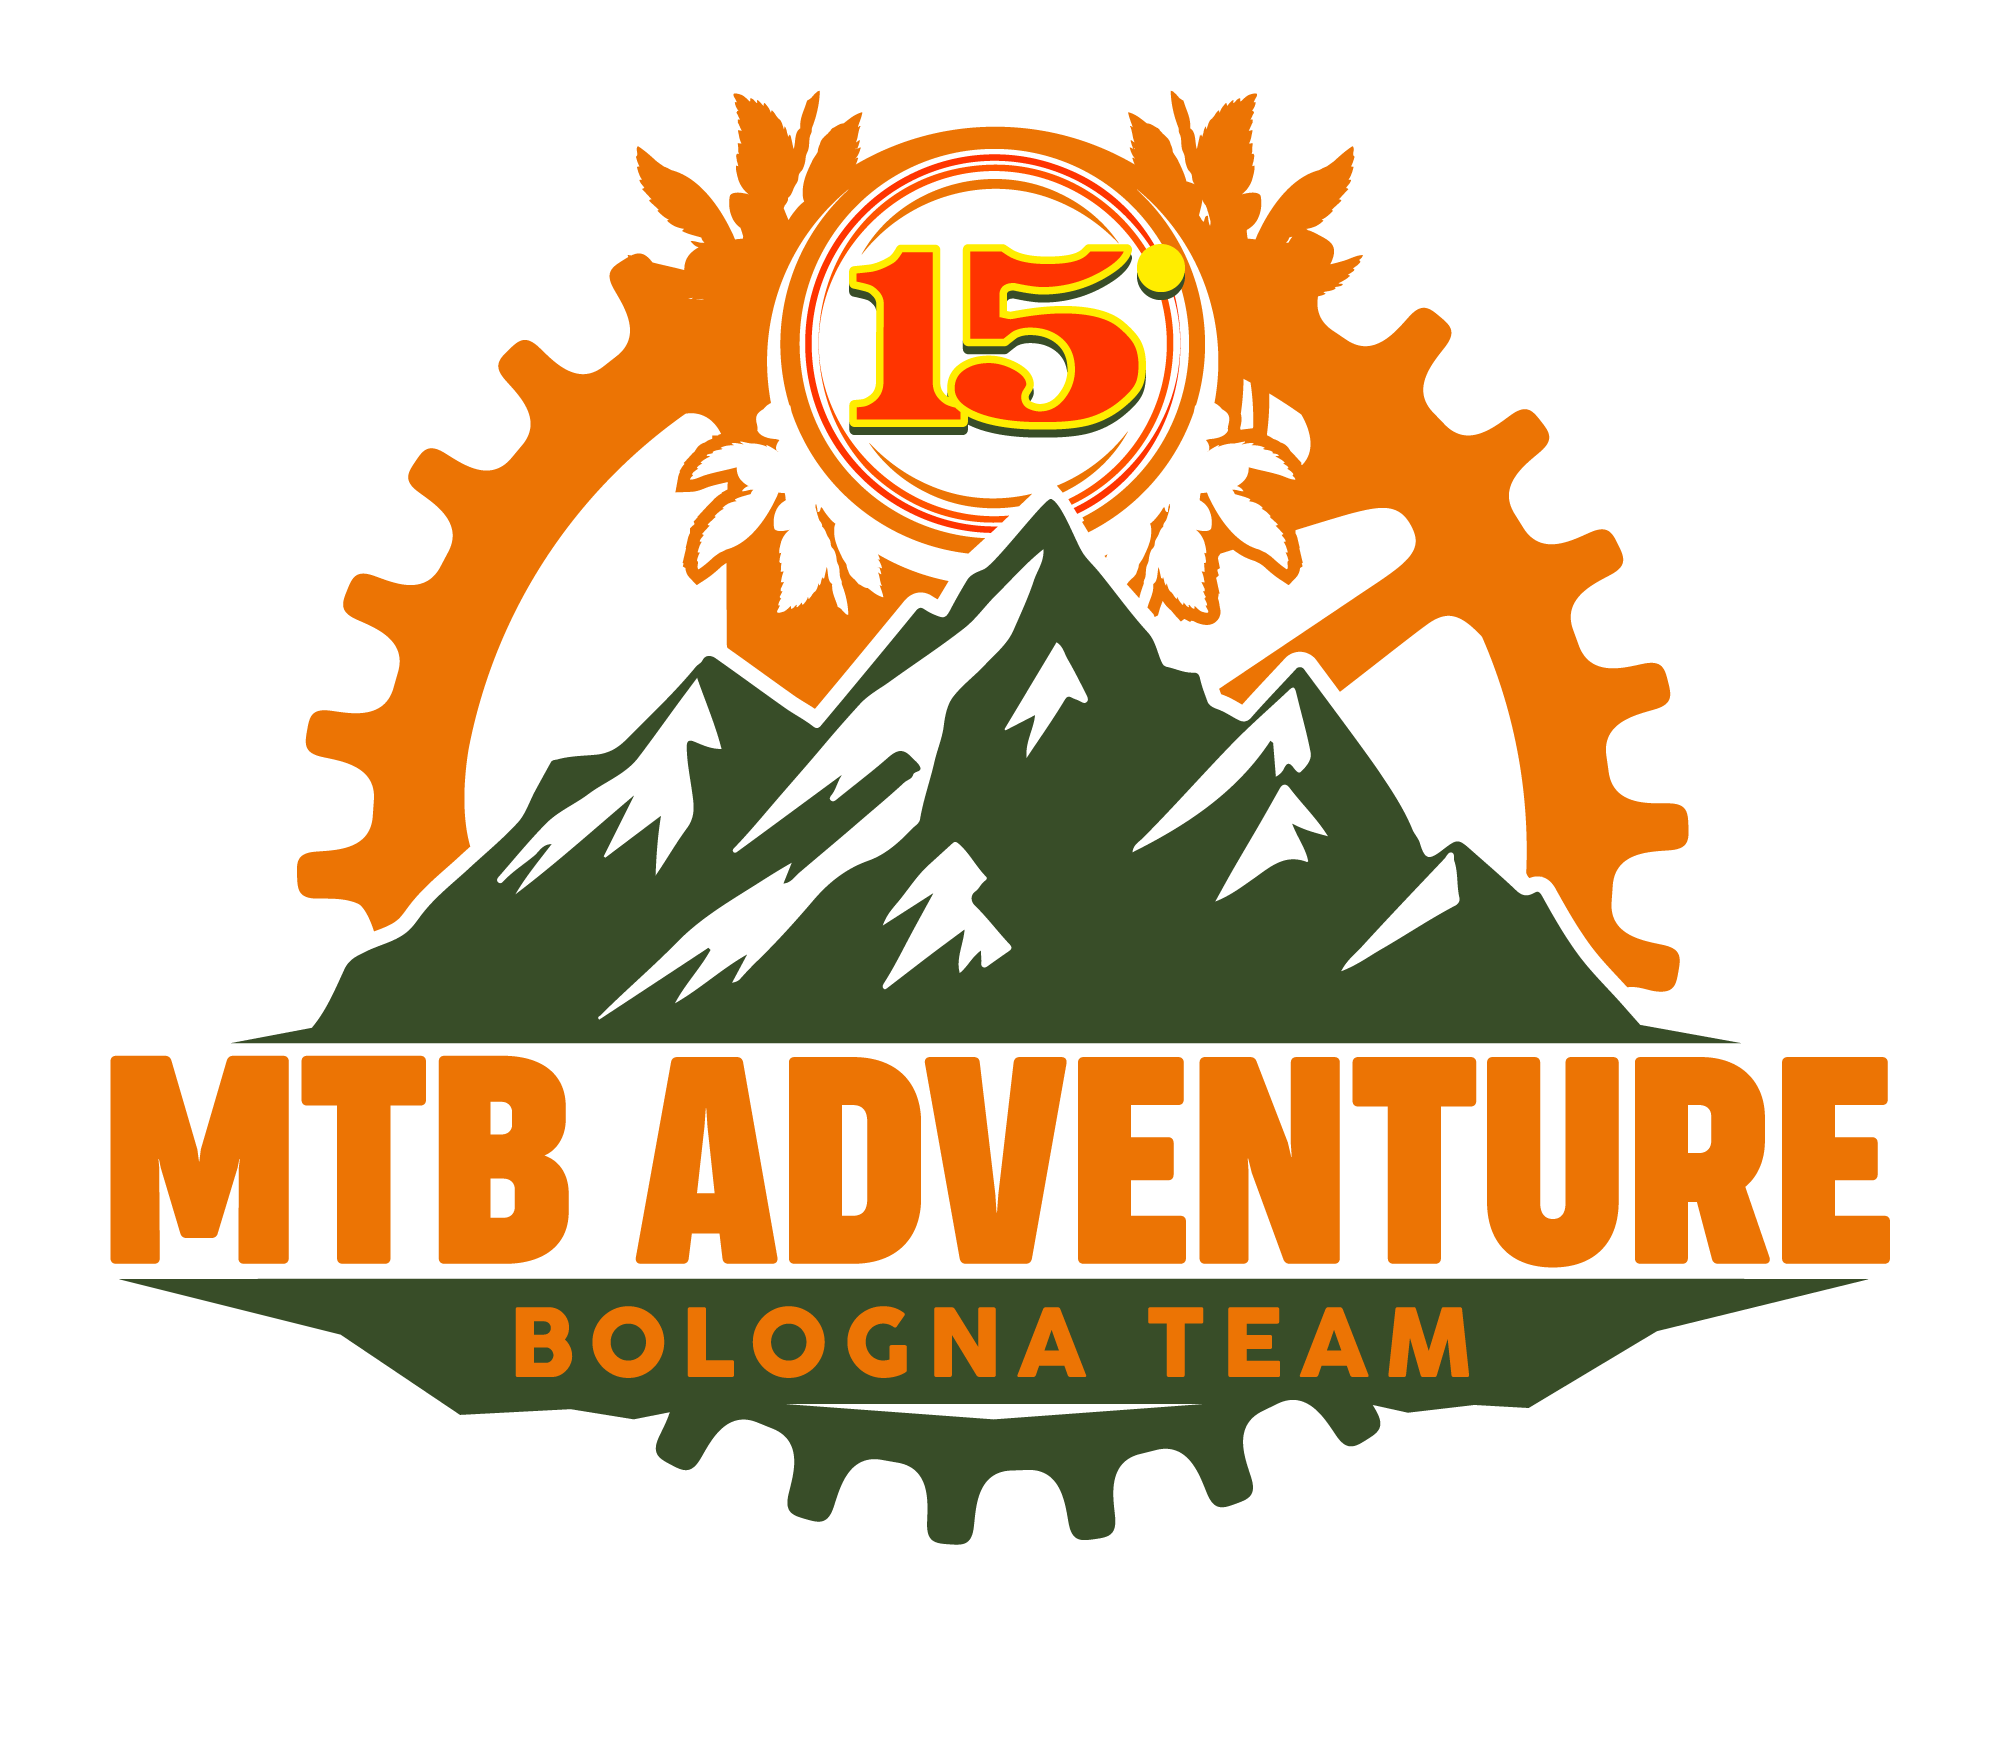 MTB Adventure Bologna